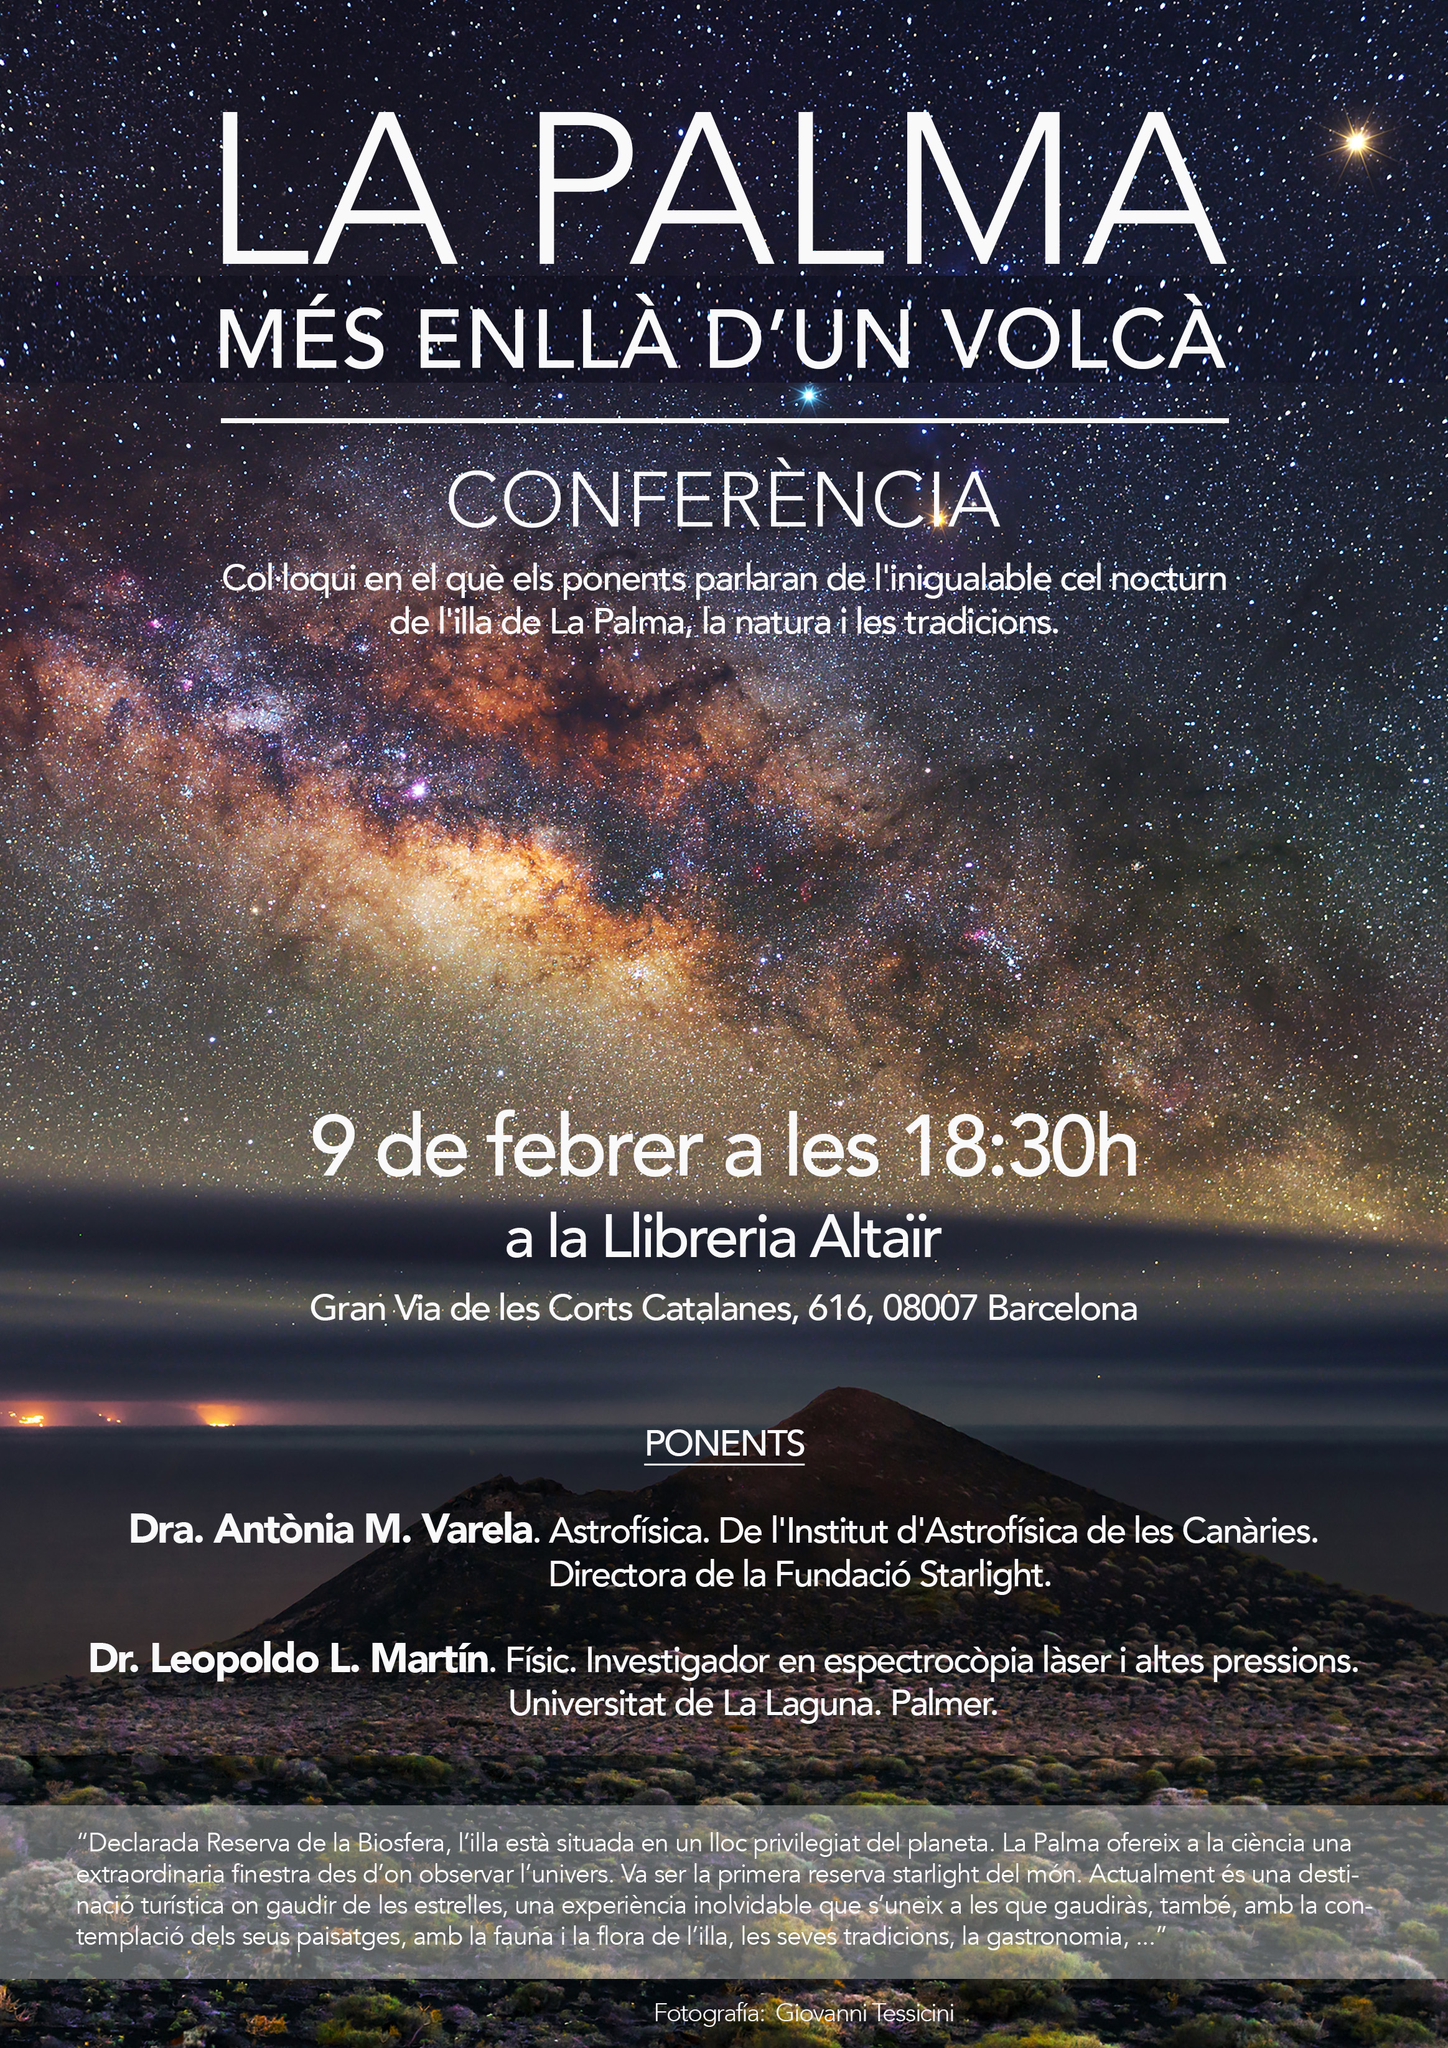 Conferencia La Palma mes enllá d'un volcan